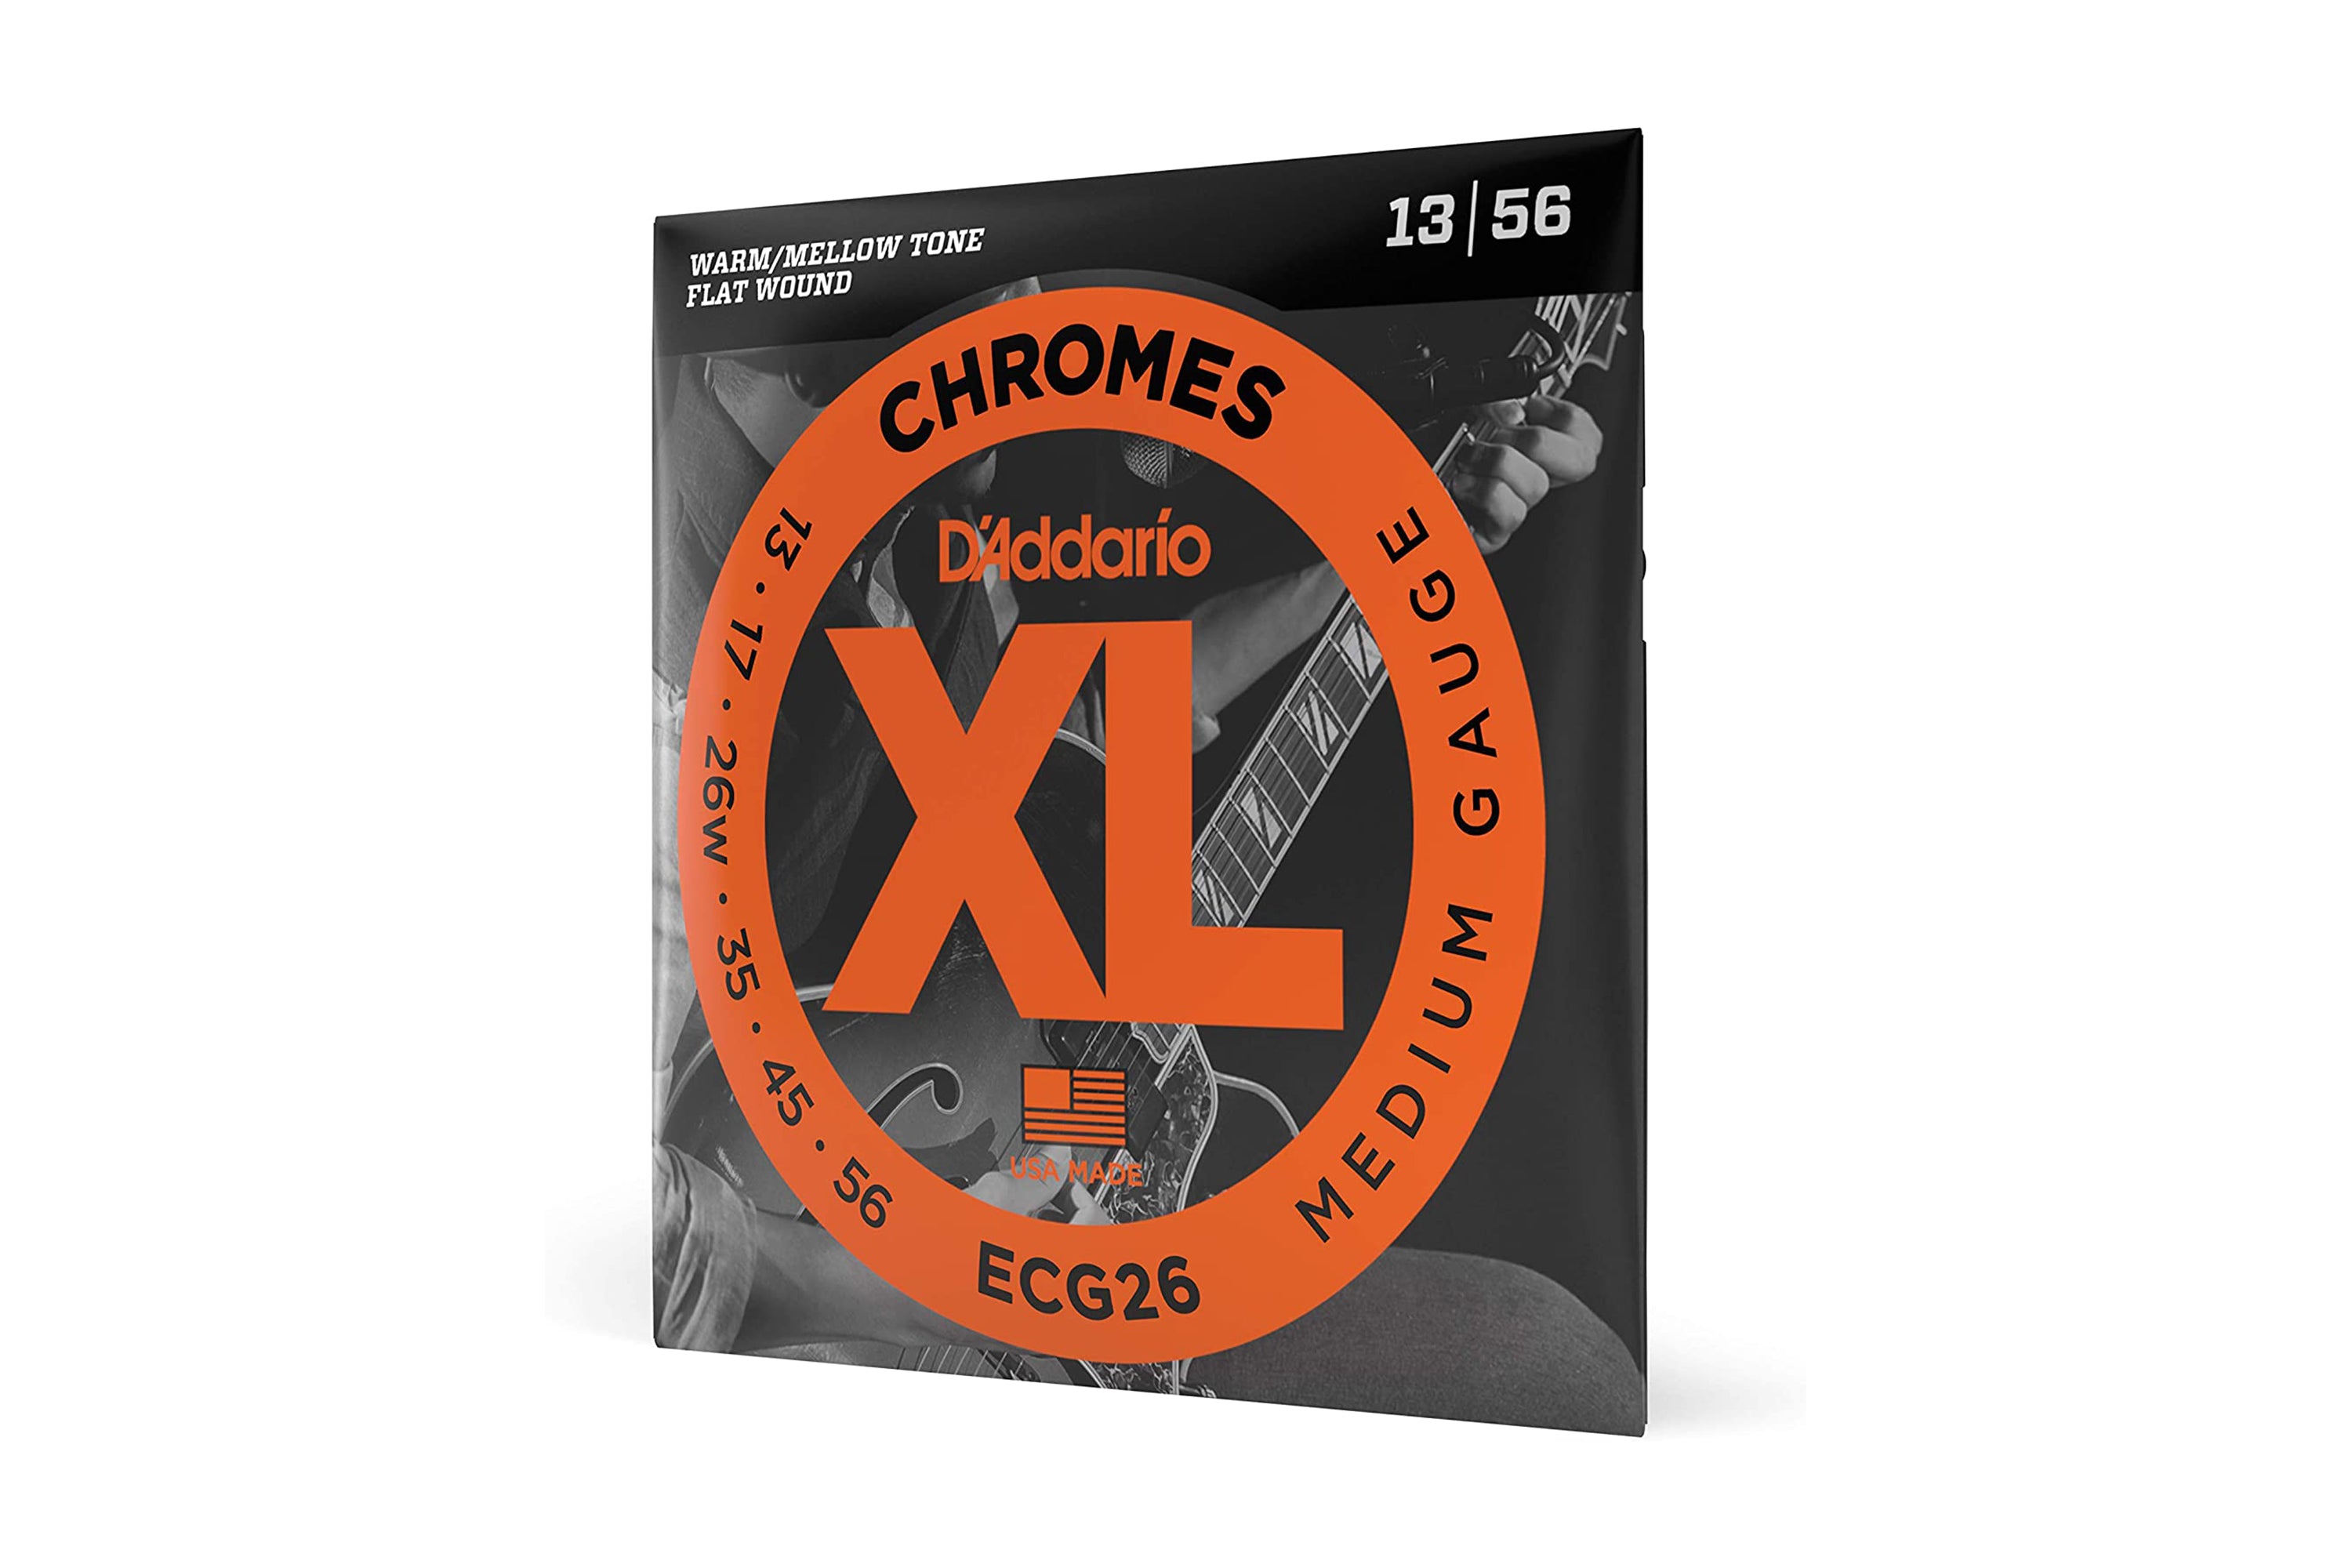 D'Addario ECG26 XL Strings